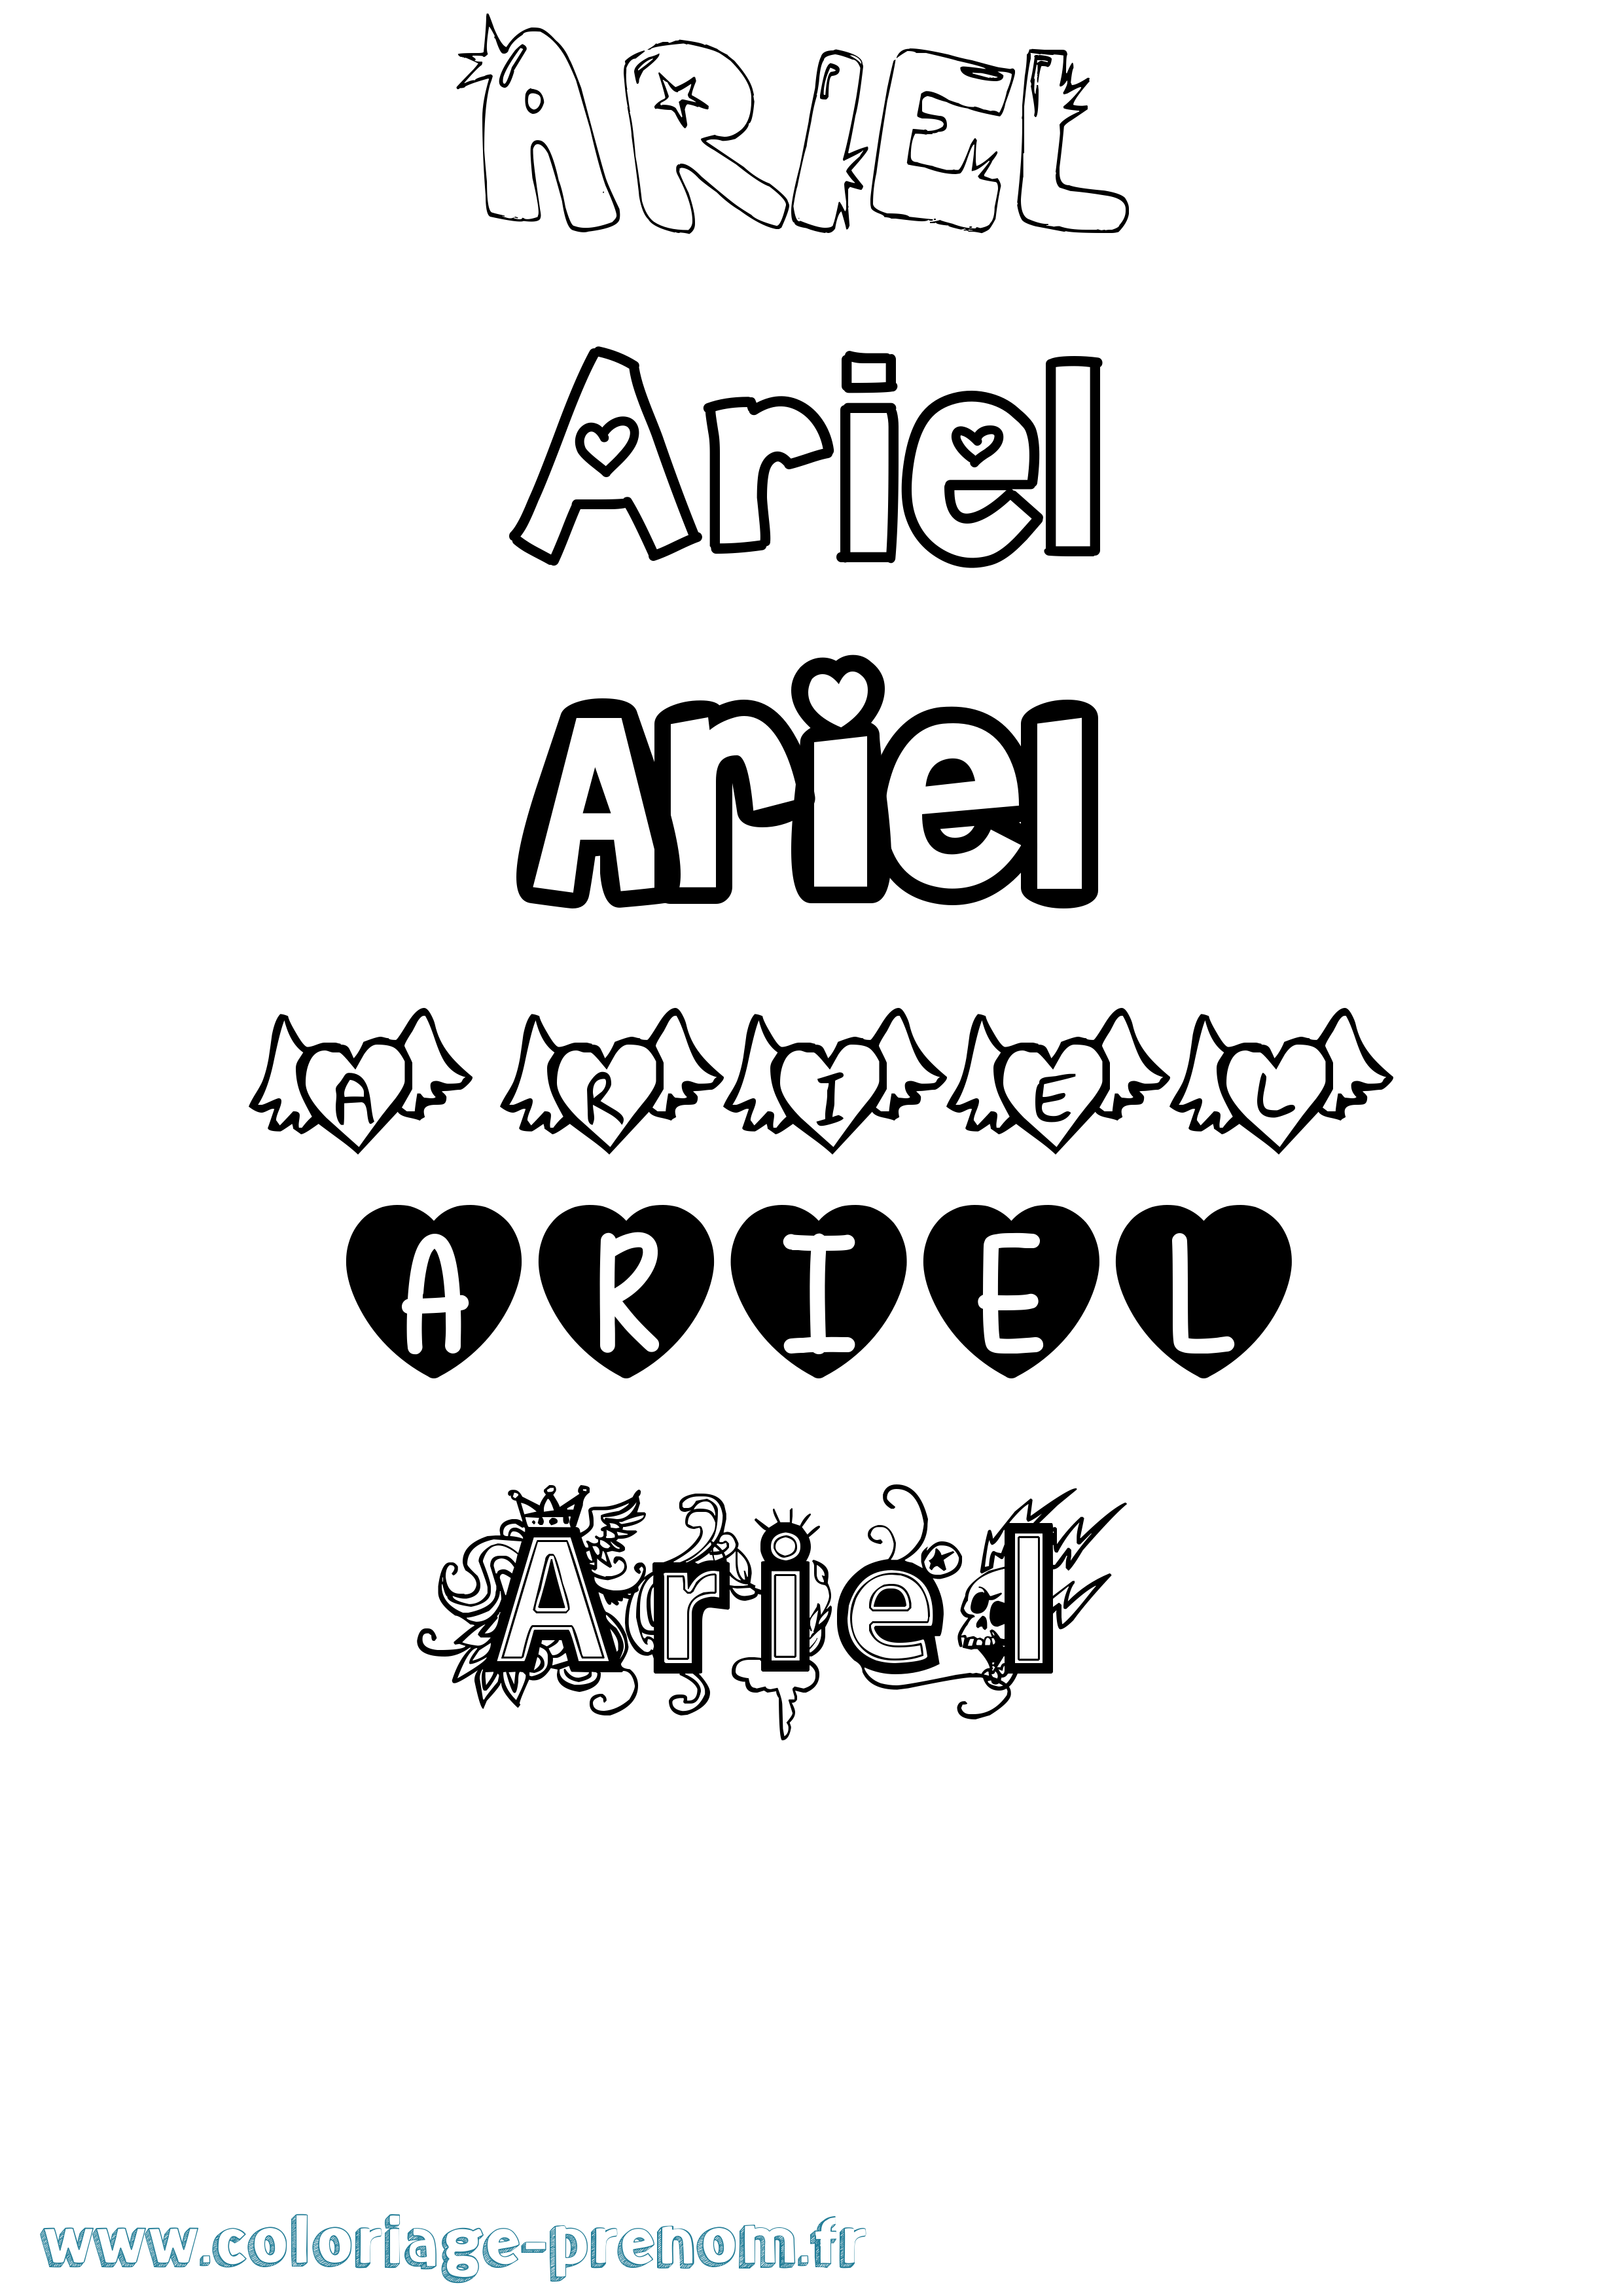 Coloriage prénom Ariel